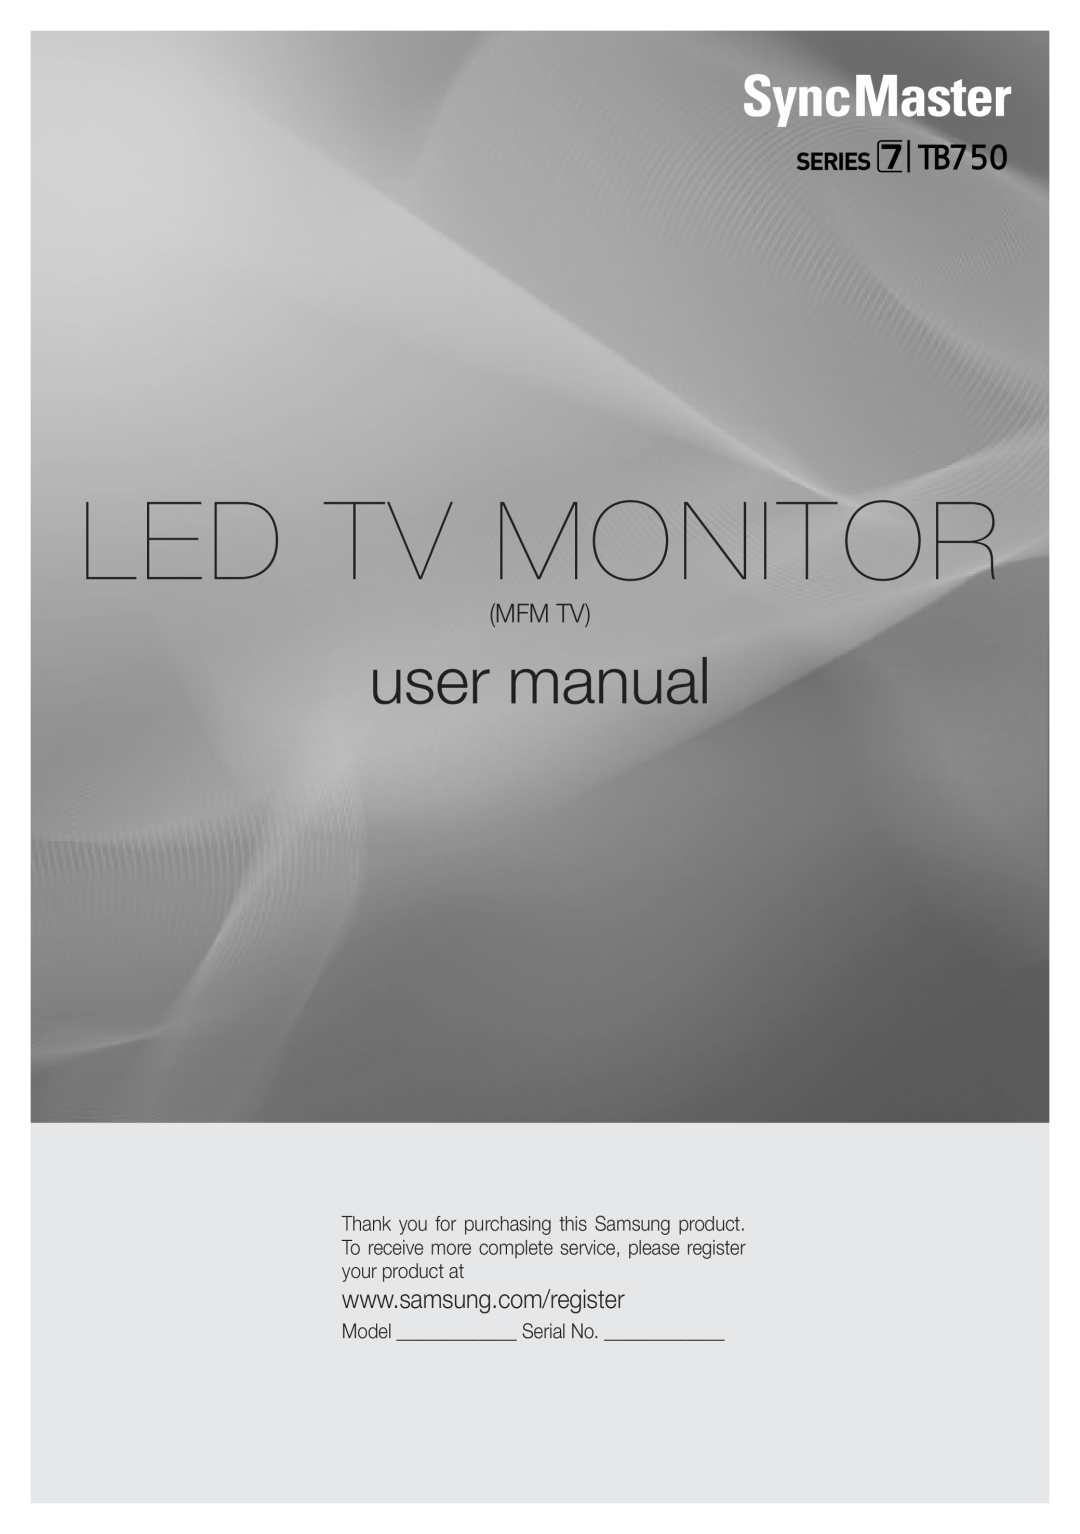 Samsung LT27B750EWV/EN, LT24B750EWV/EN, LT24B750EW/EN manual Mfm Tv, Model Serial No, Led Tv Monitor, user manual, 5# 